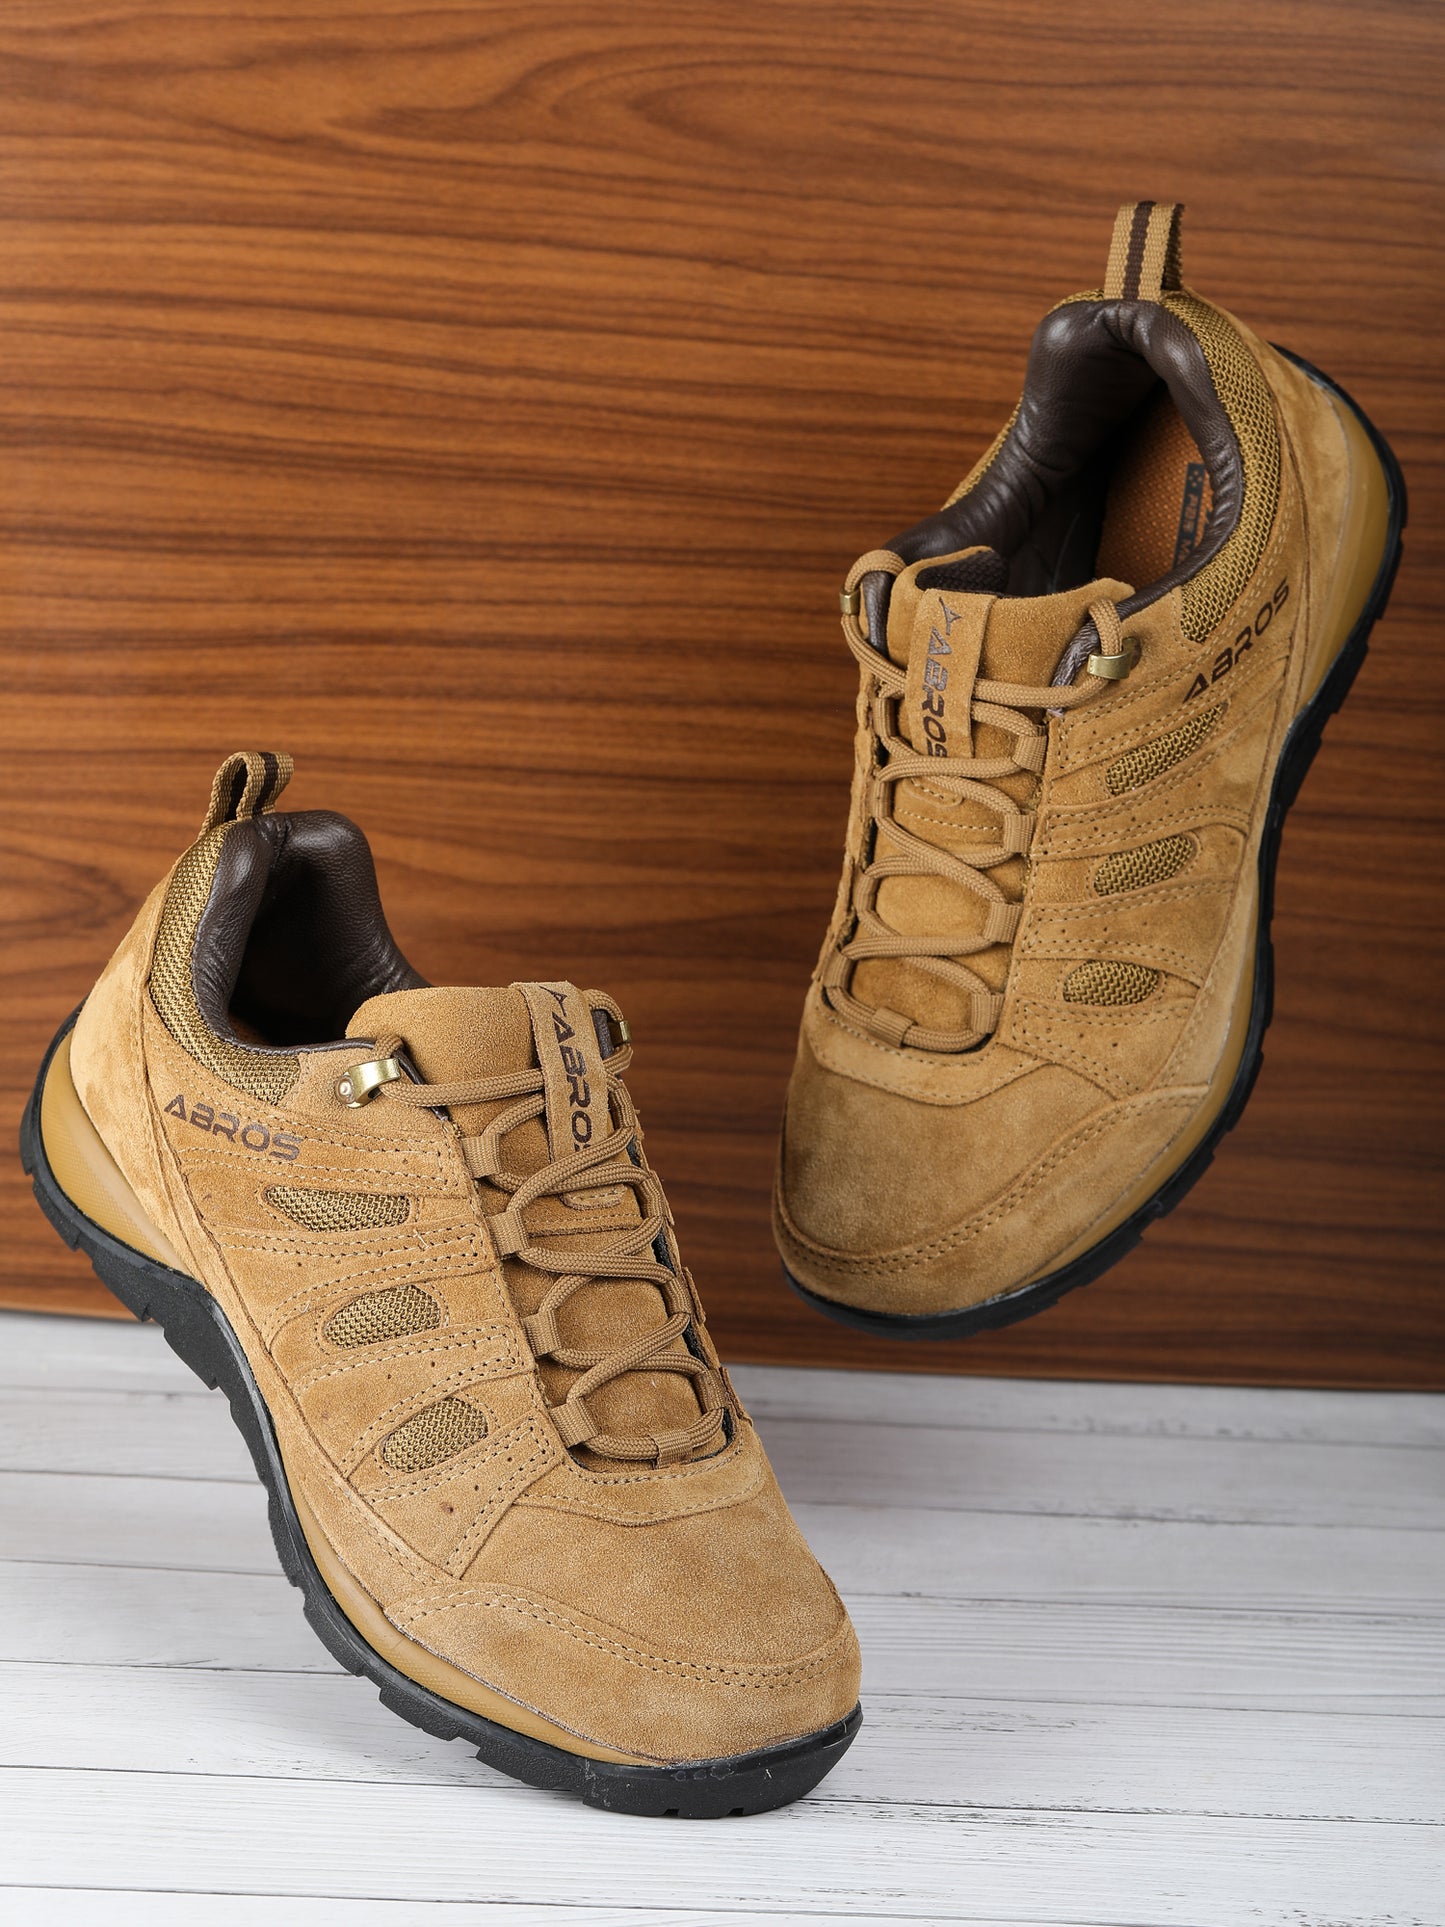 Russoo Outdoor-Shoes For Men's